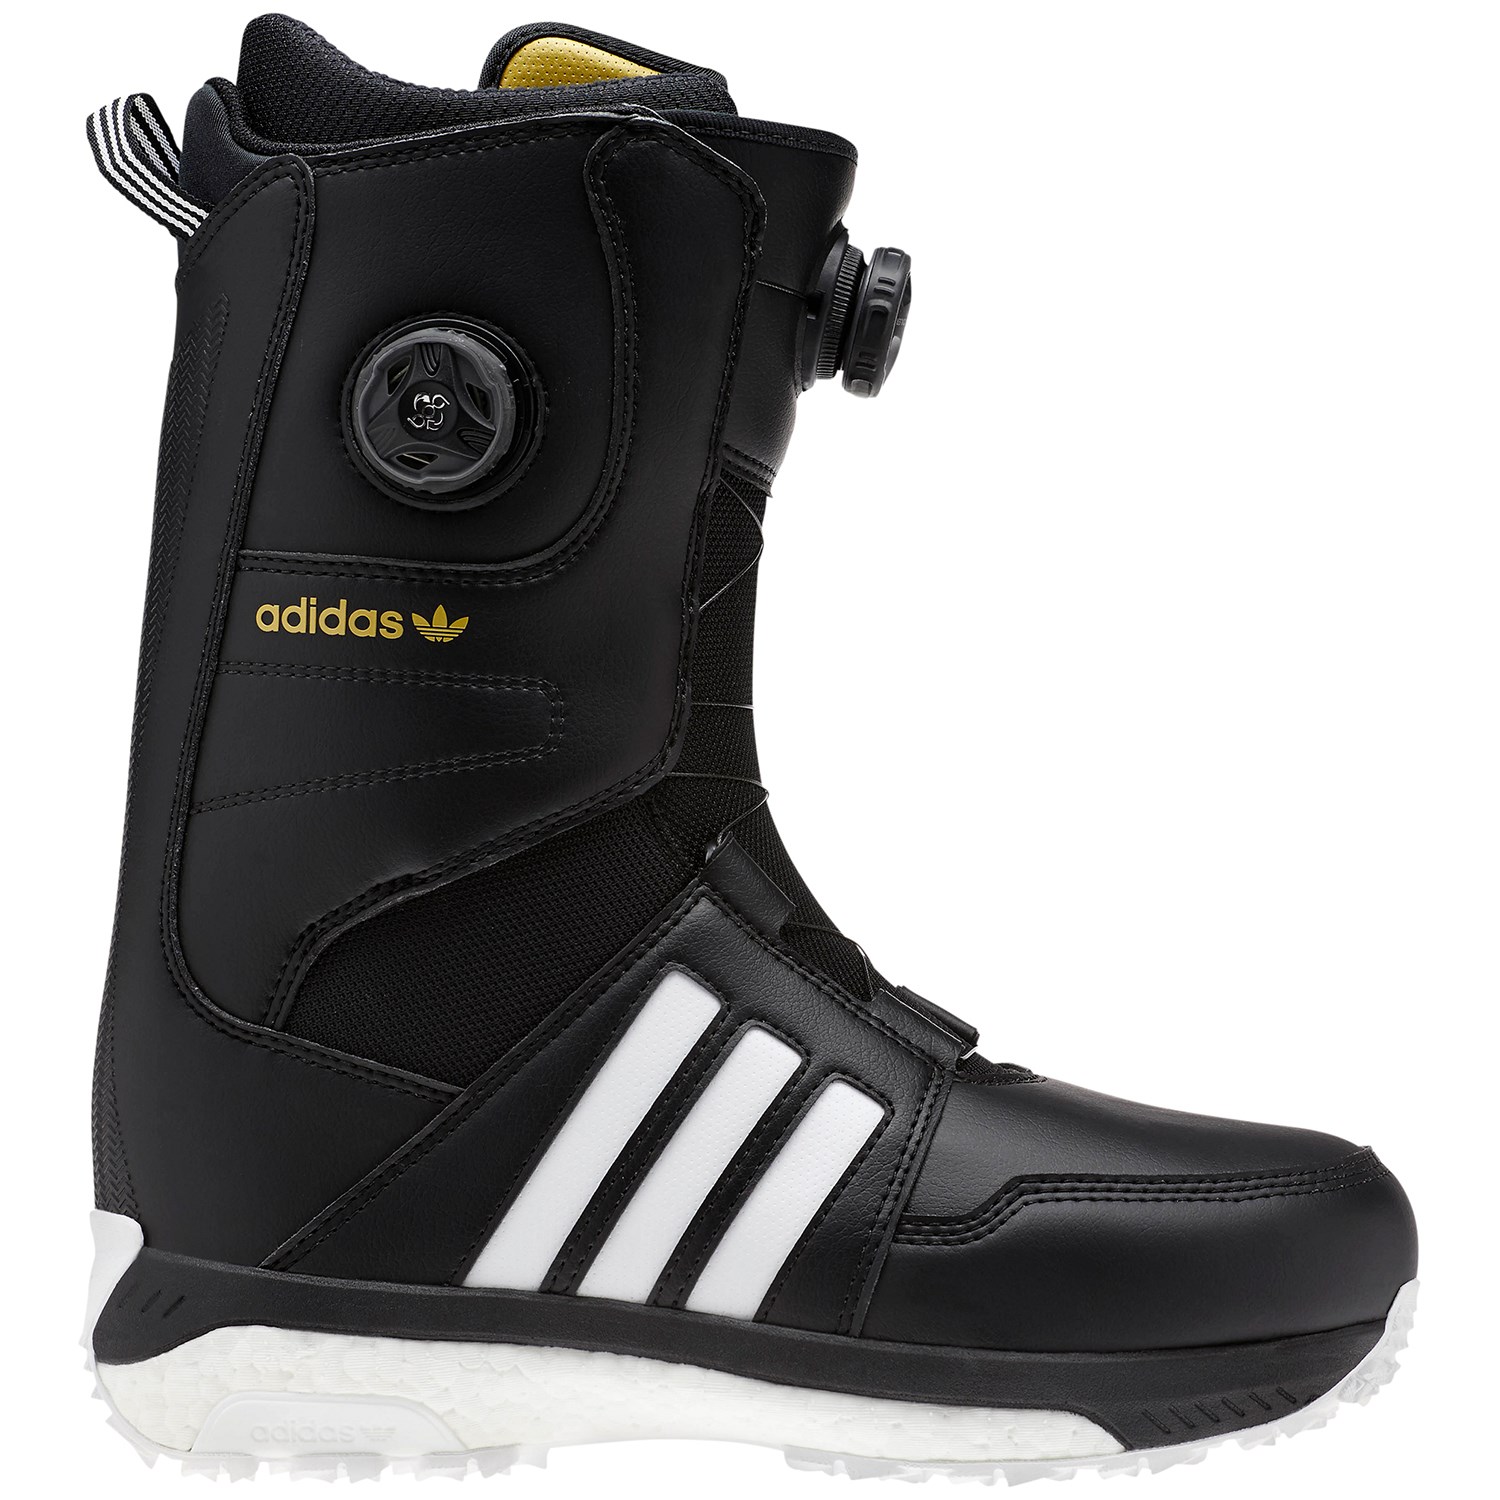 Adidas Acerra ADV Snowboard Boots 2019 